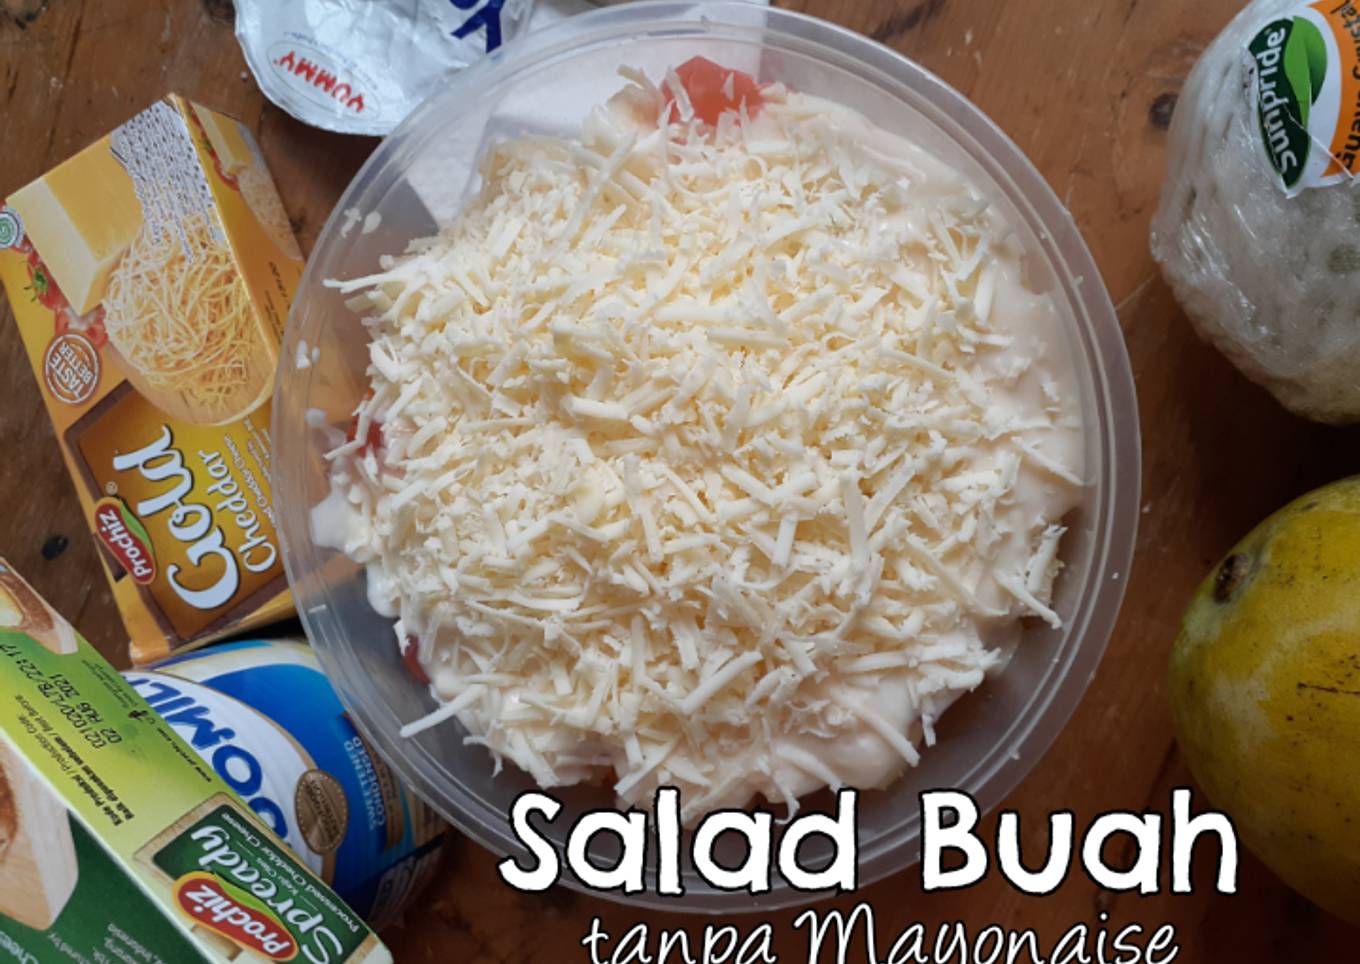 Salad Buah tanpa mayonaise - resep kuliner nusantara